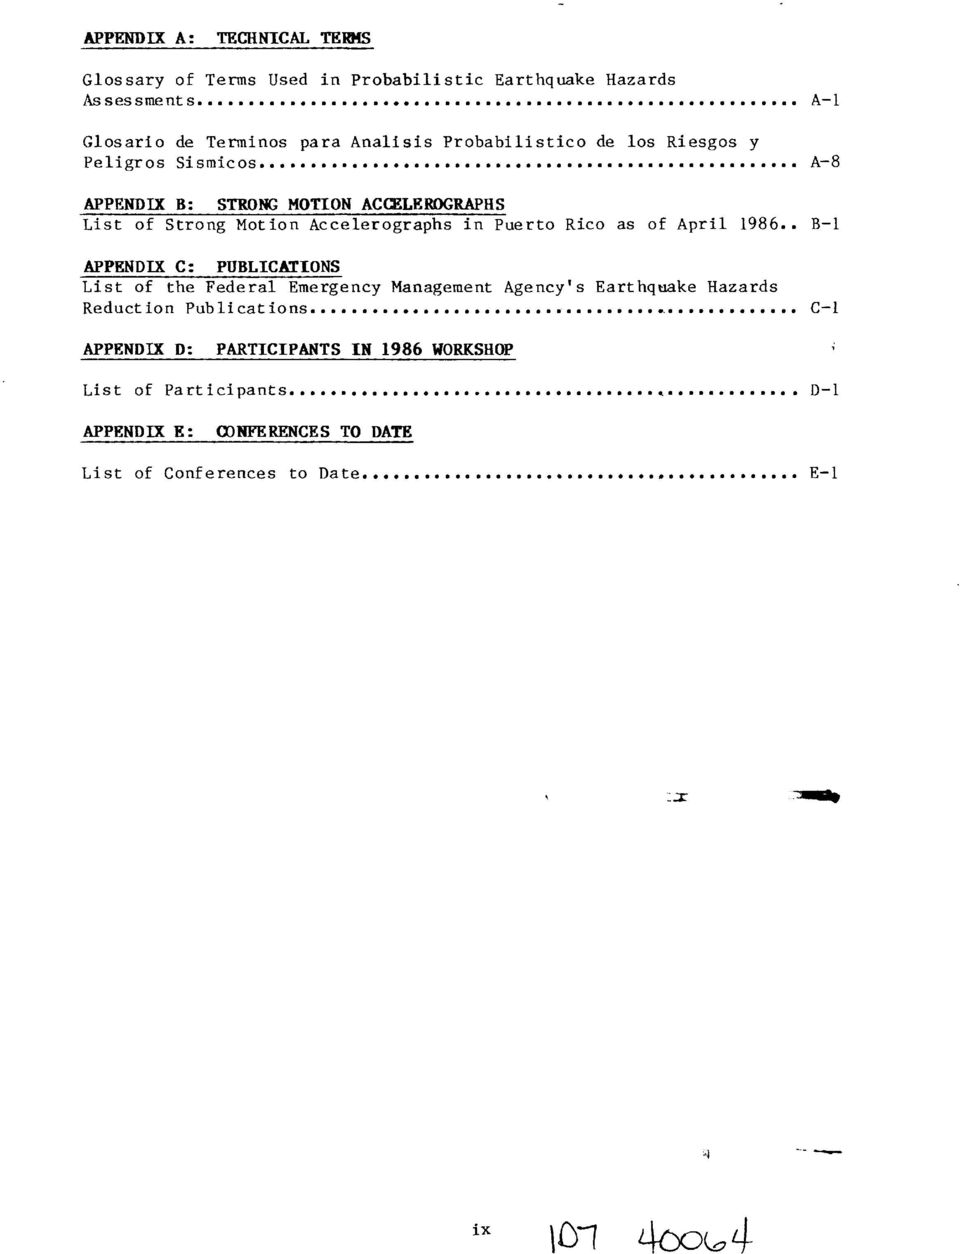 .. A-8 APPENDIX B: STRONG MOTION ACCBLEROGRAPHS List of Strong Motion Accelerographs in Puerto Rico as of April 1986.